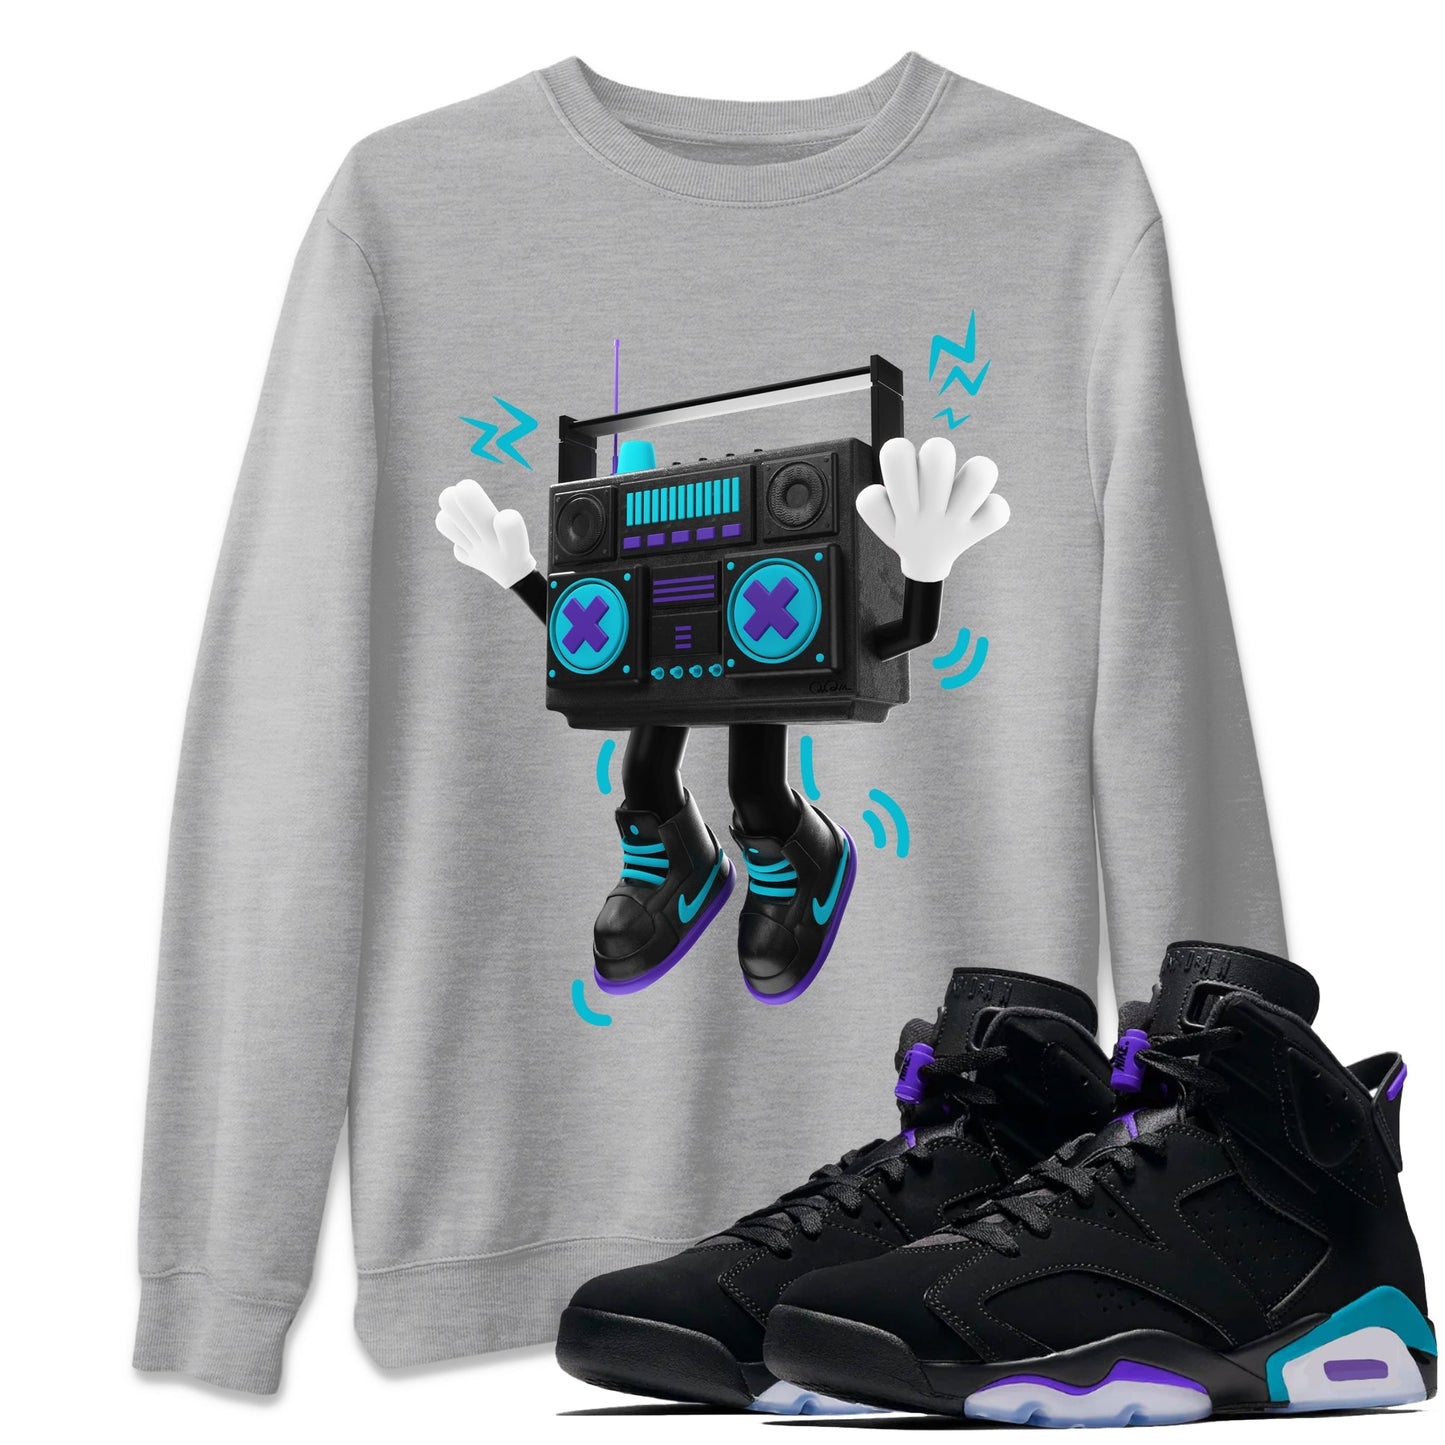 Air Jordan 6 Aqua Sneaker Match Tees 90s Radio Boy Sneaker Tees AJ6 Aqua Sneaker Release Tees Unisex Shirts Heather Grey 1